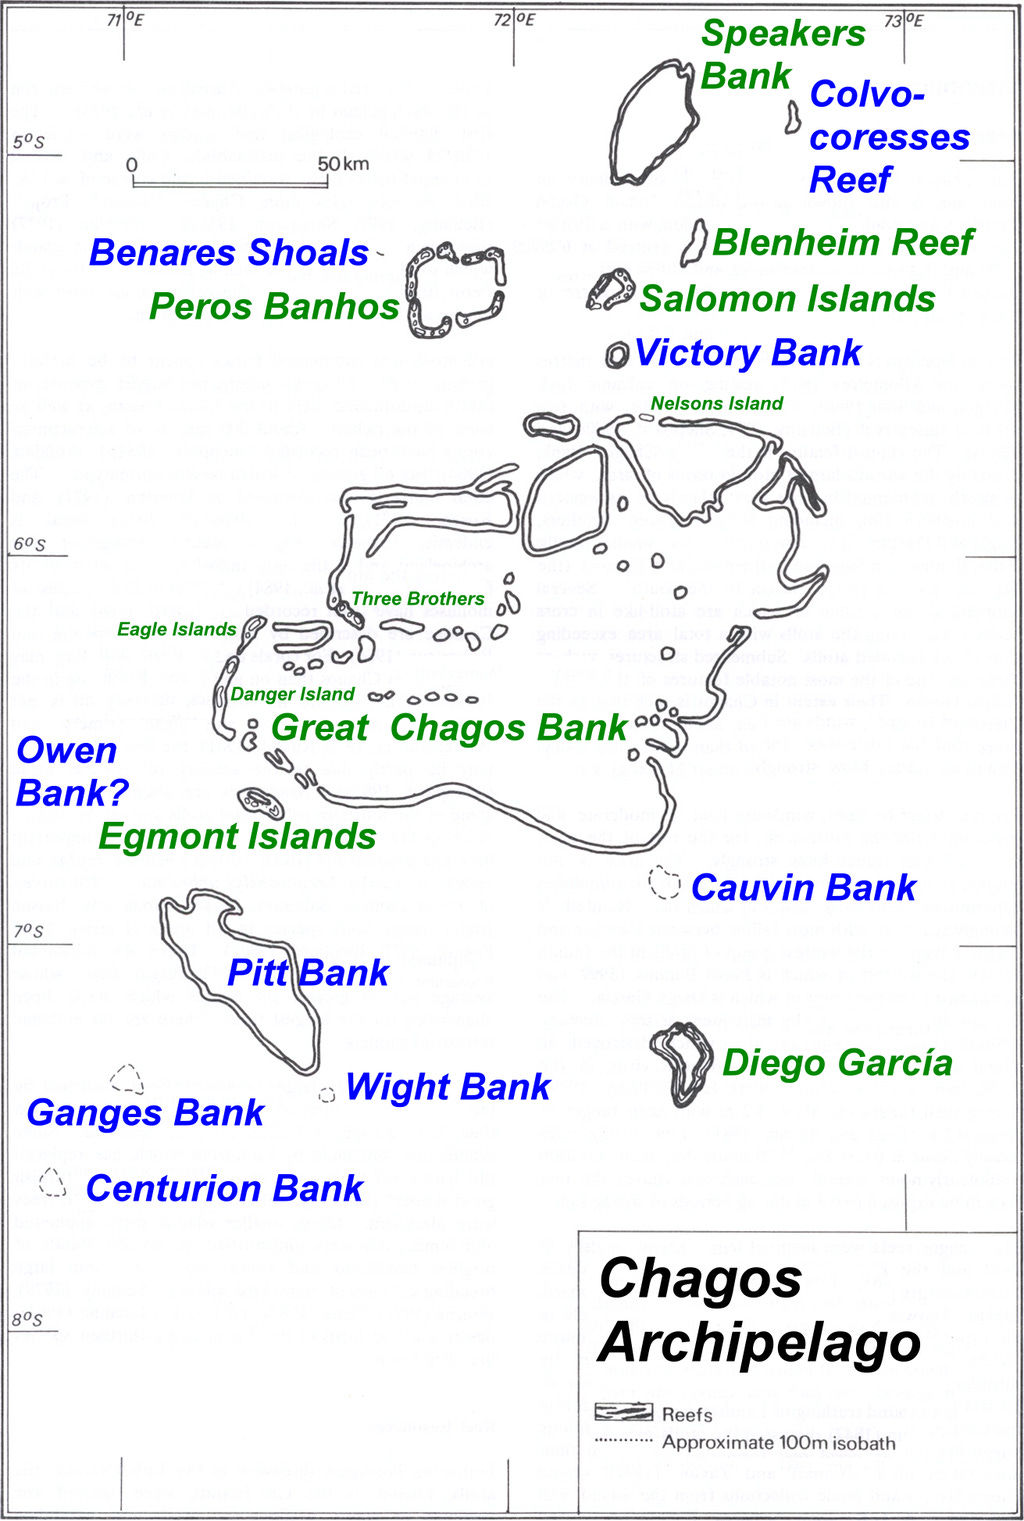 The Chagos Archipelago (Image: NOAA, adapted by user Ratzer, Public domain, via Wikimedia Commons)